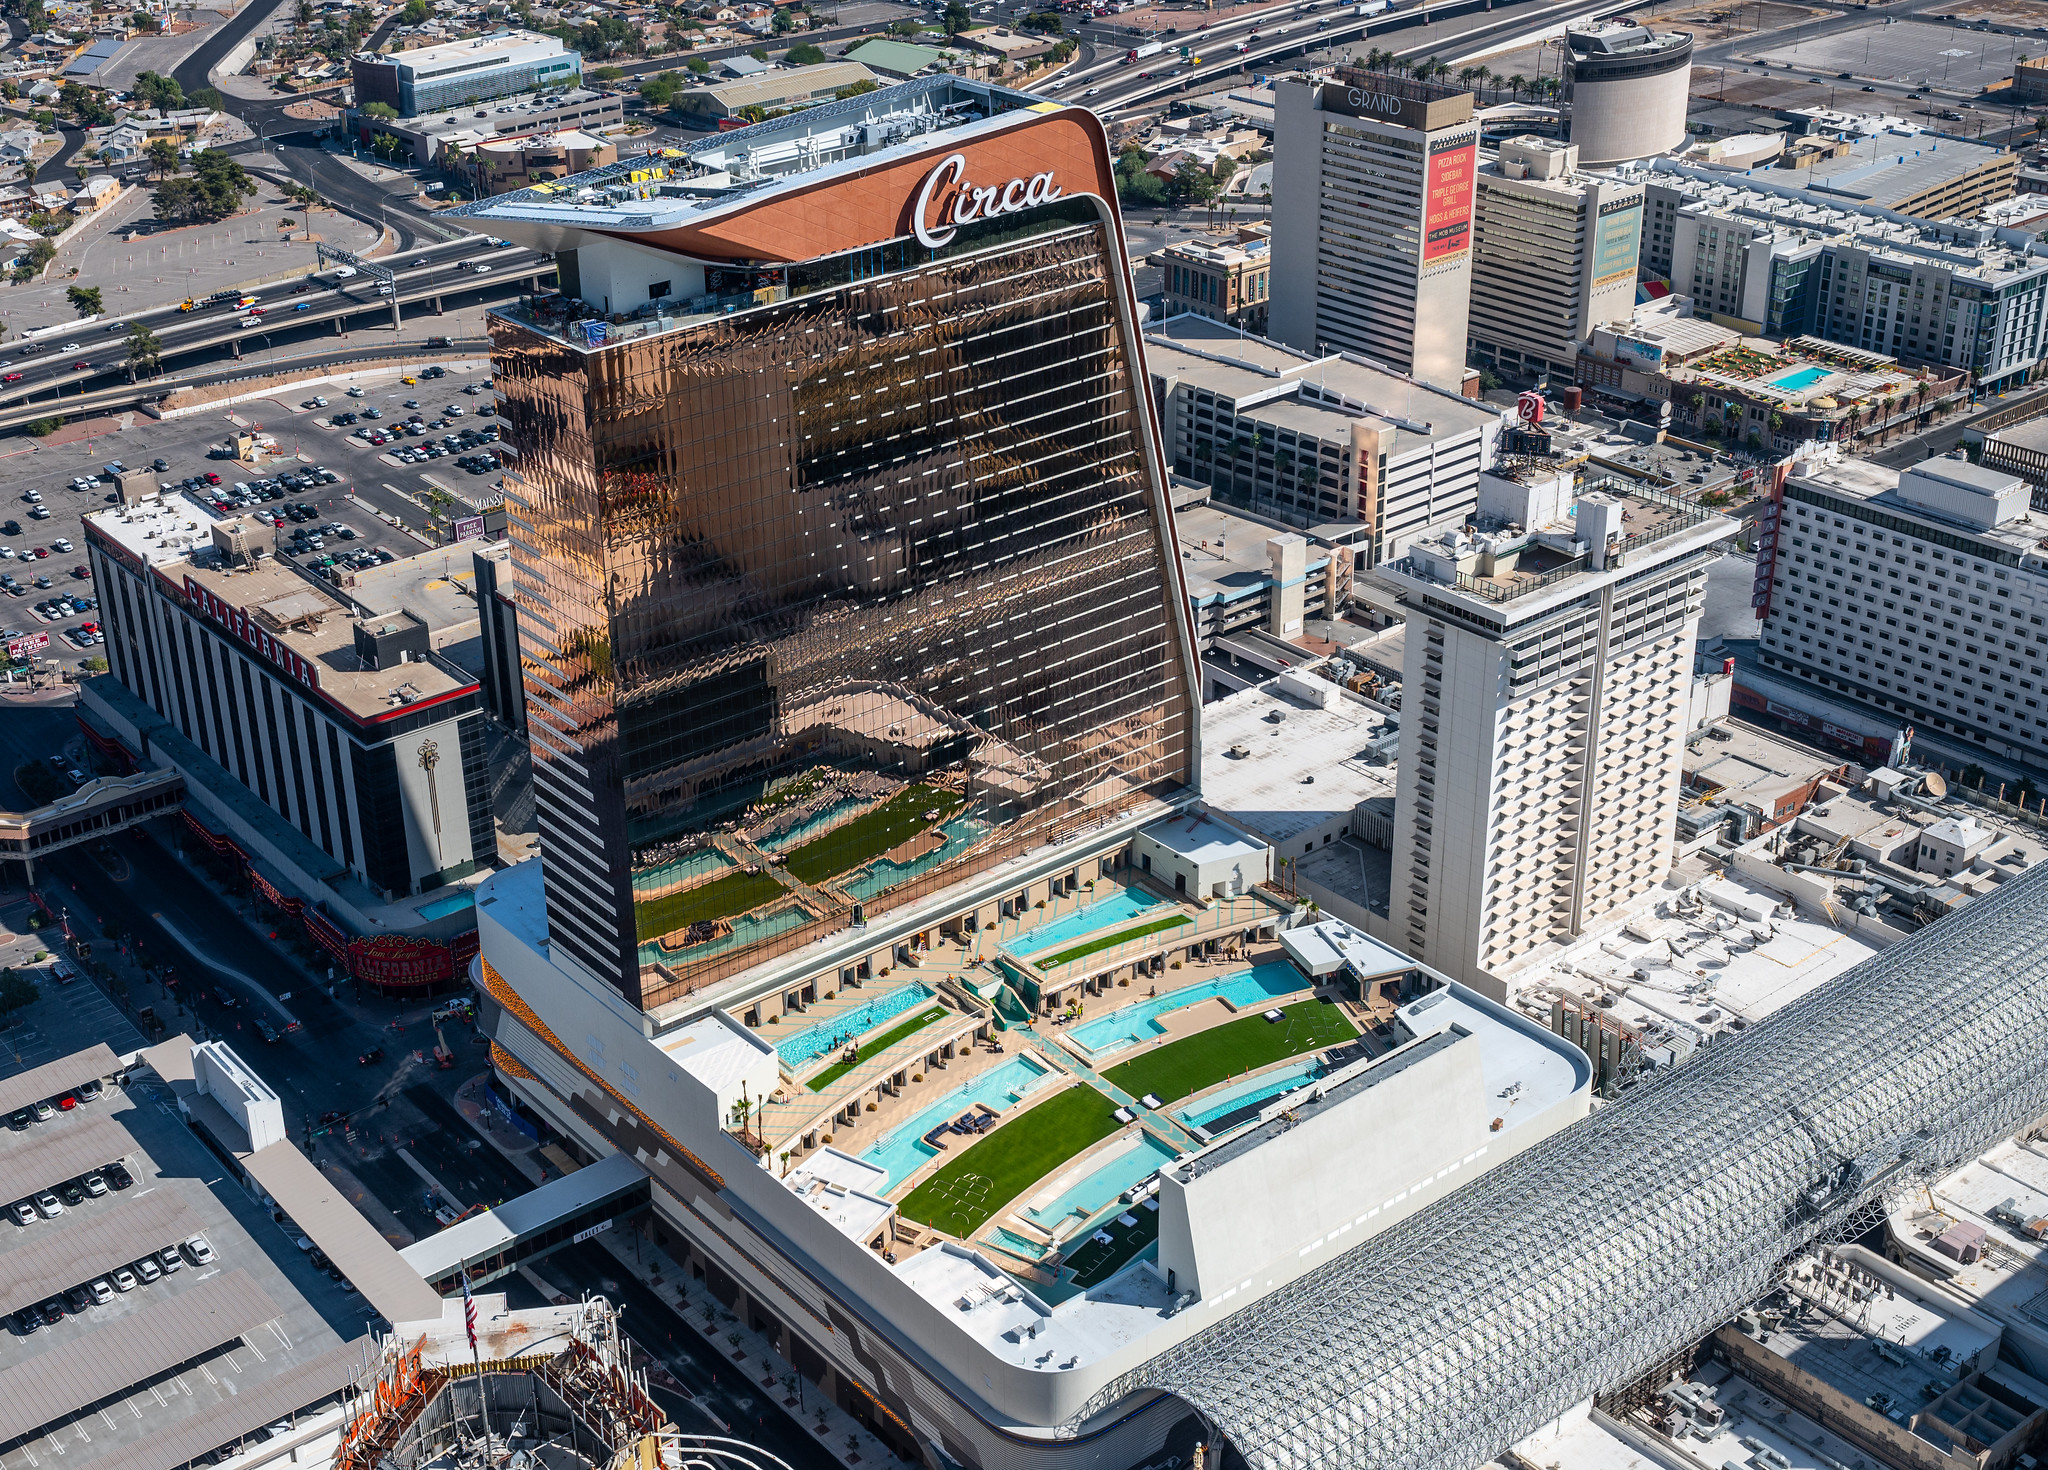 Circa Resort & Casino Las Vegas: The Time of Your Life